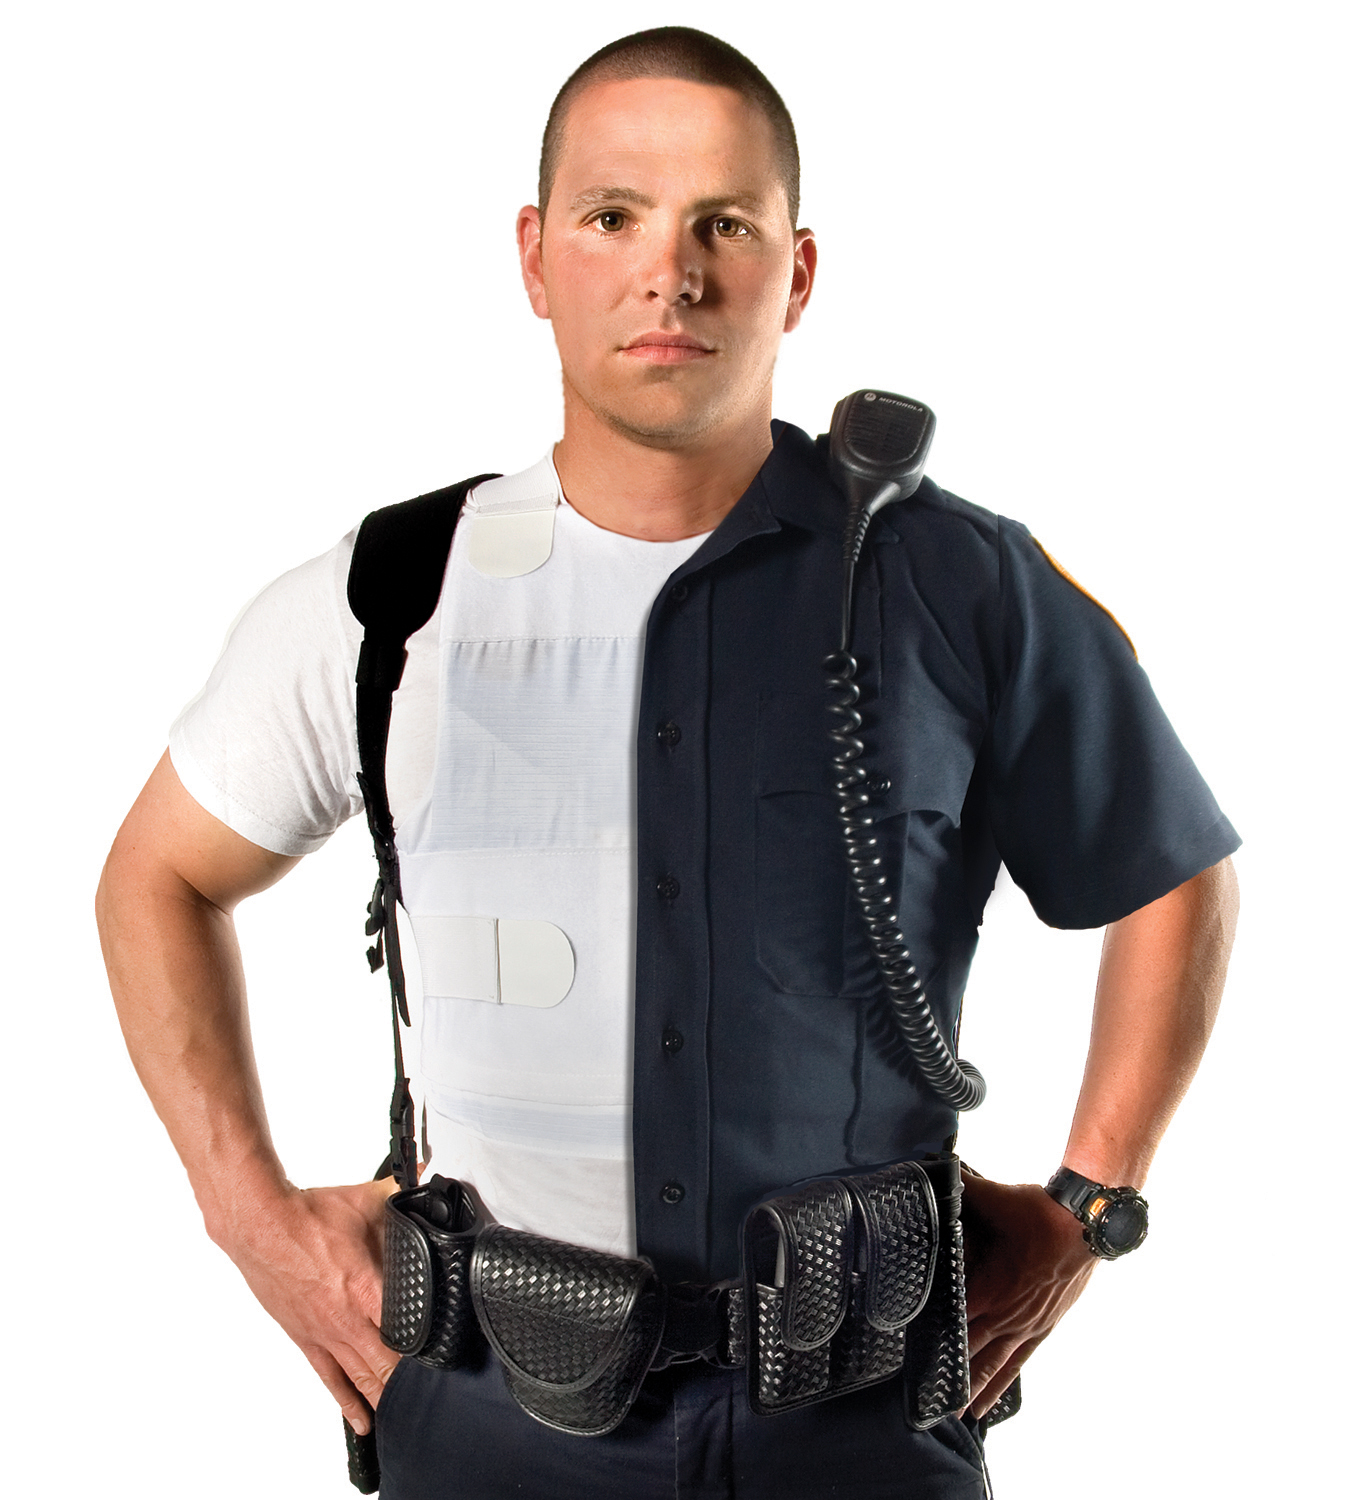 Ergonomic duty belt harness